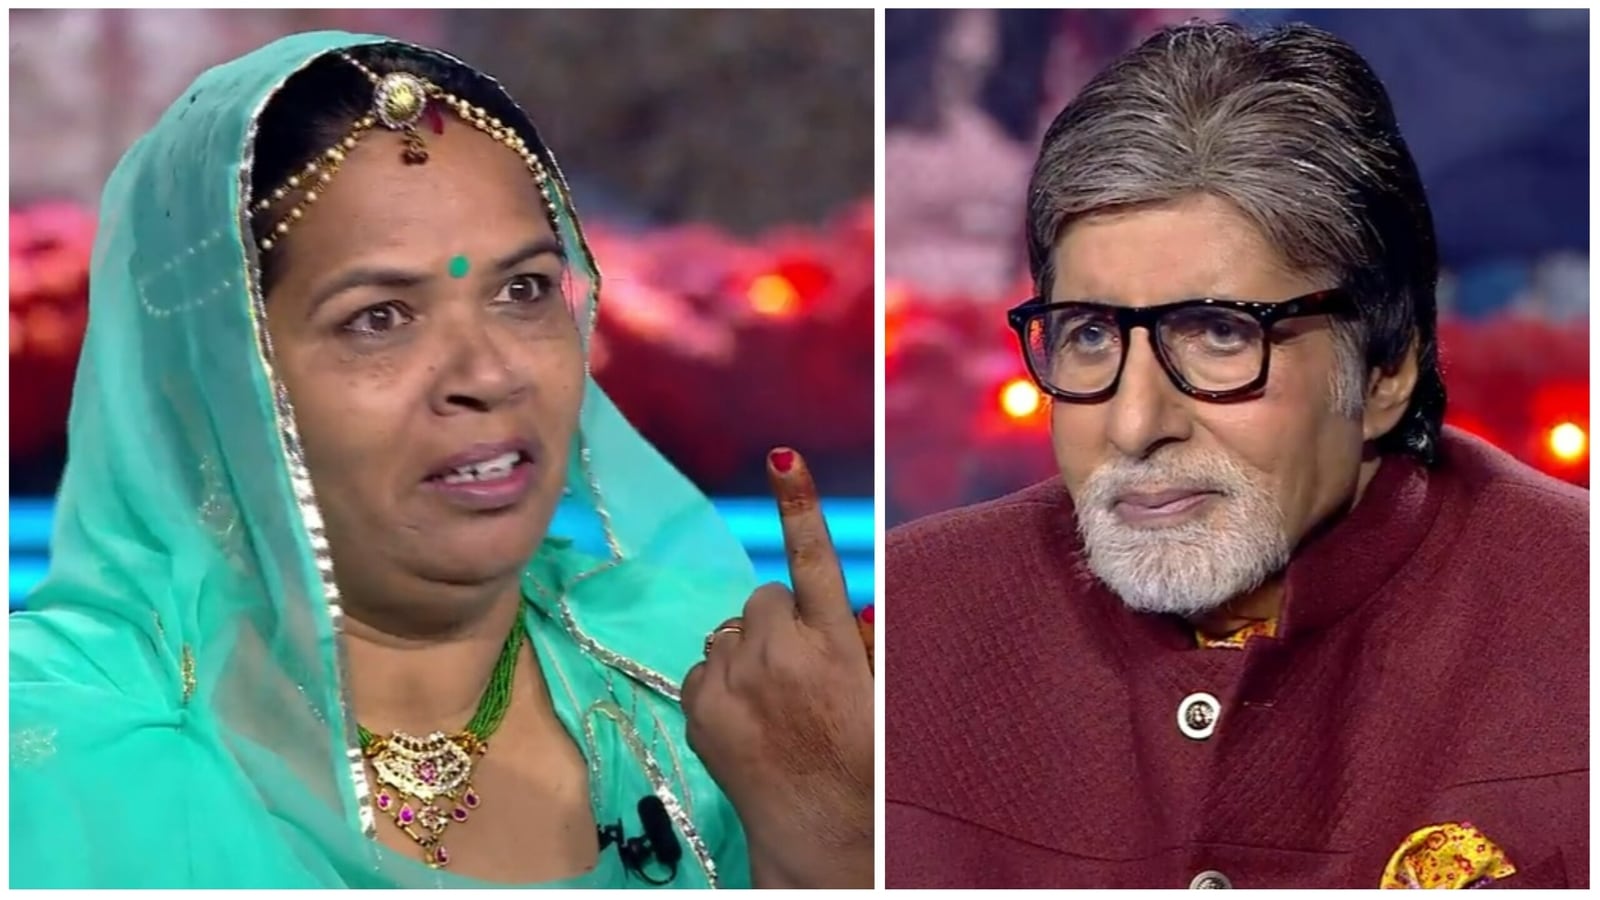 Amitabh Bachchan calls Kaun Banega Crorepati 14 contestant Shobha Kanwar ‘bhagwan ke samaan’, makes her emotional. Watch